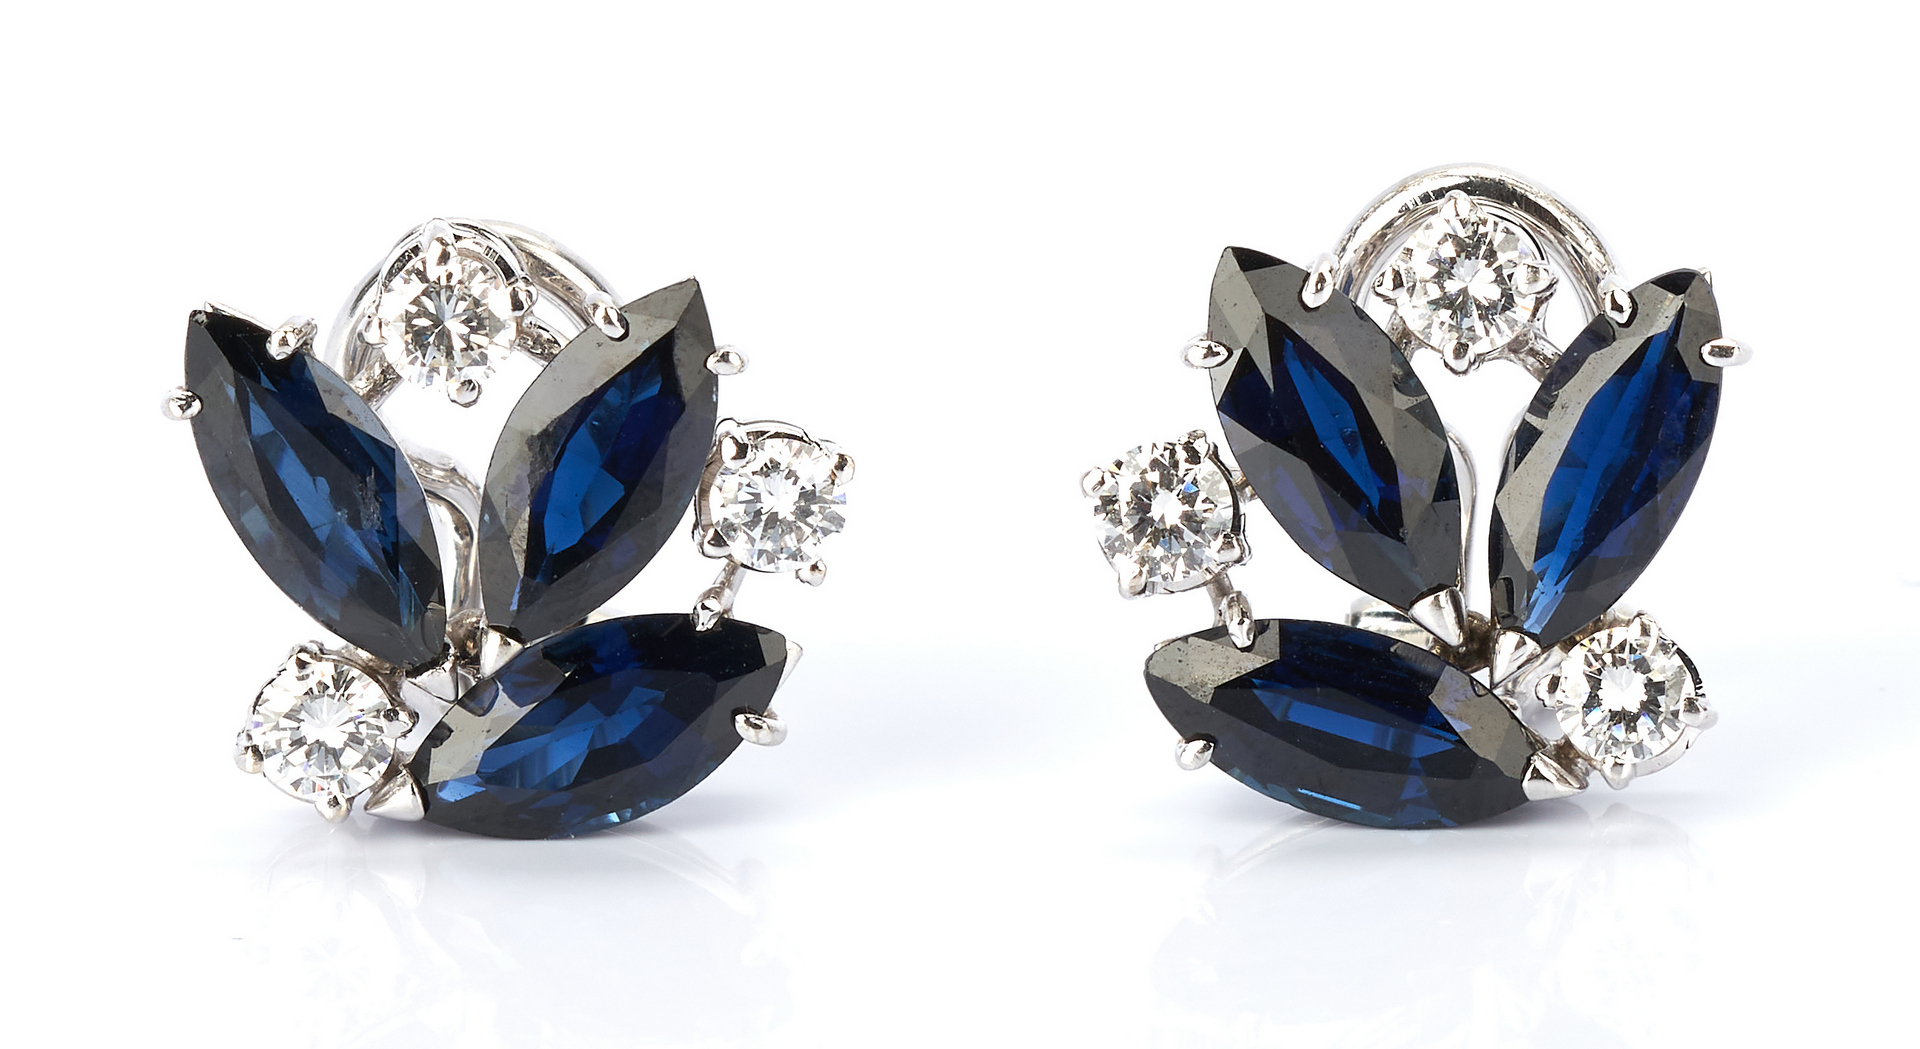 Lot 424: 14K Sapphire and Diamond 4 Piece Jewelry Set